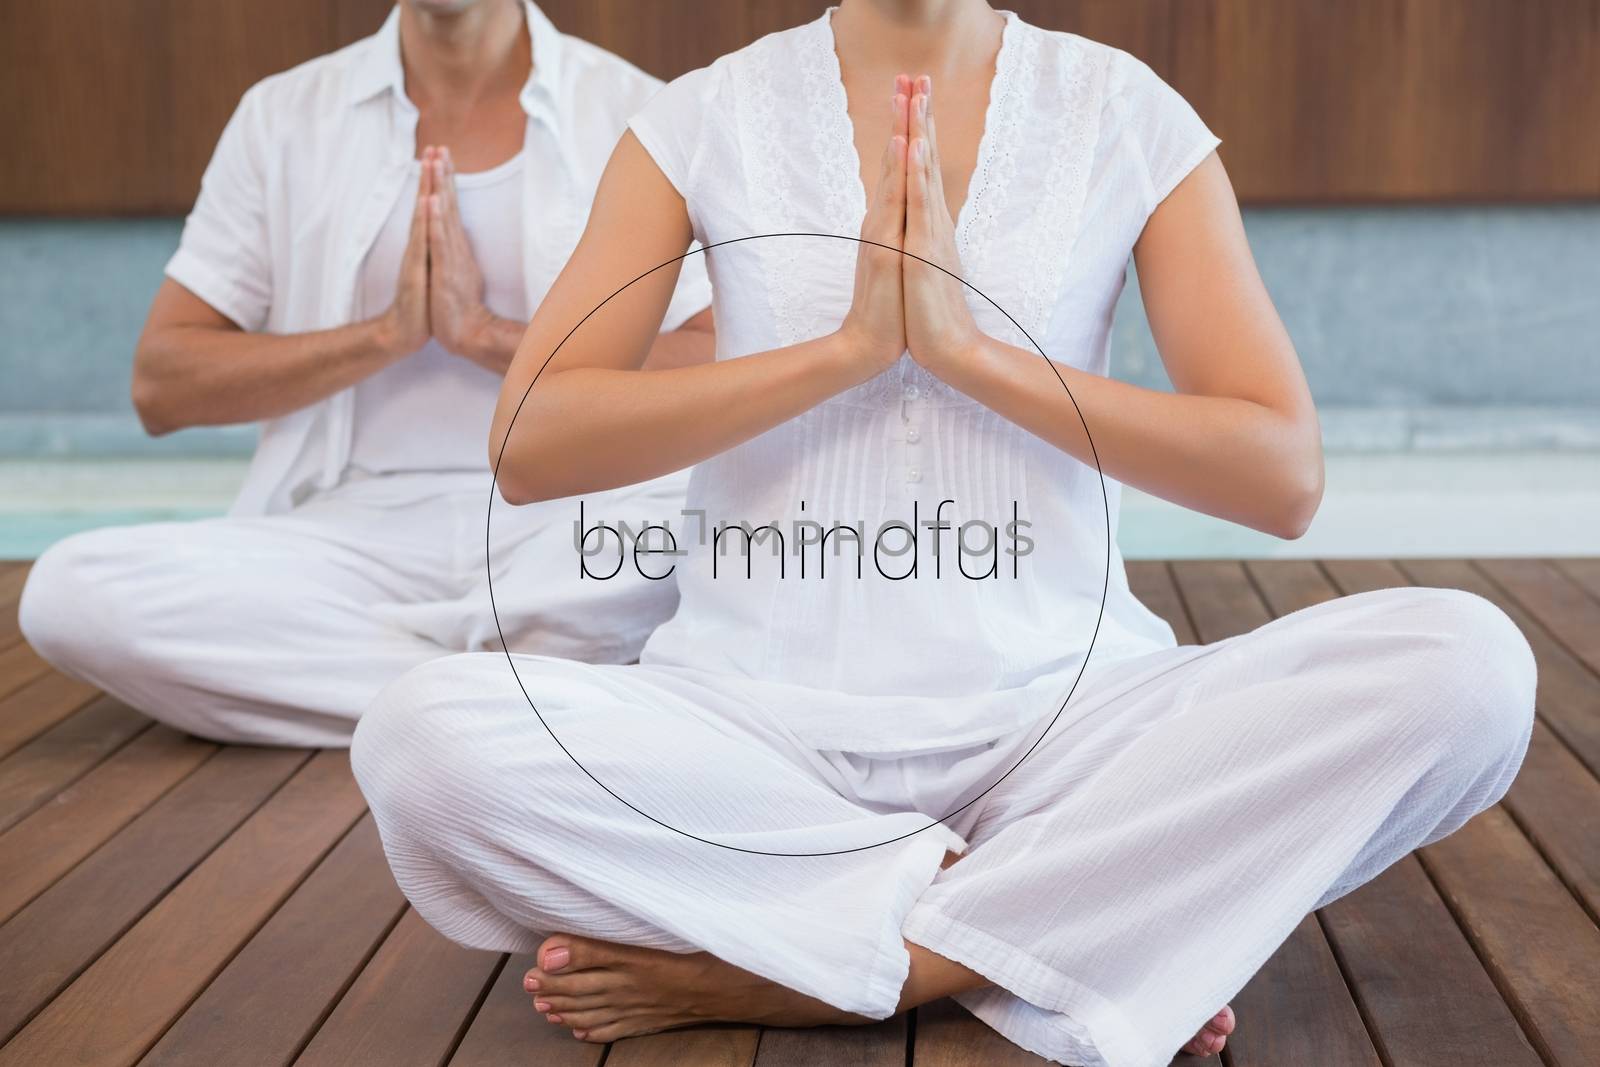 Couple performing yoga by Wavebreakmedia